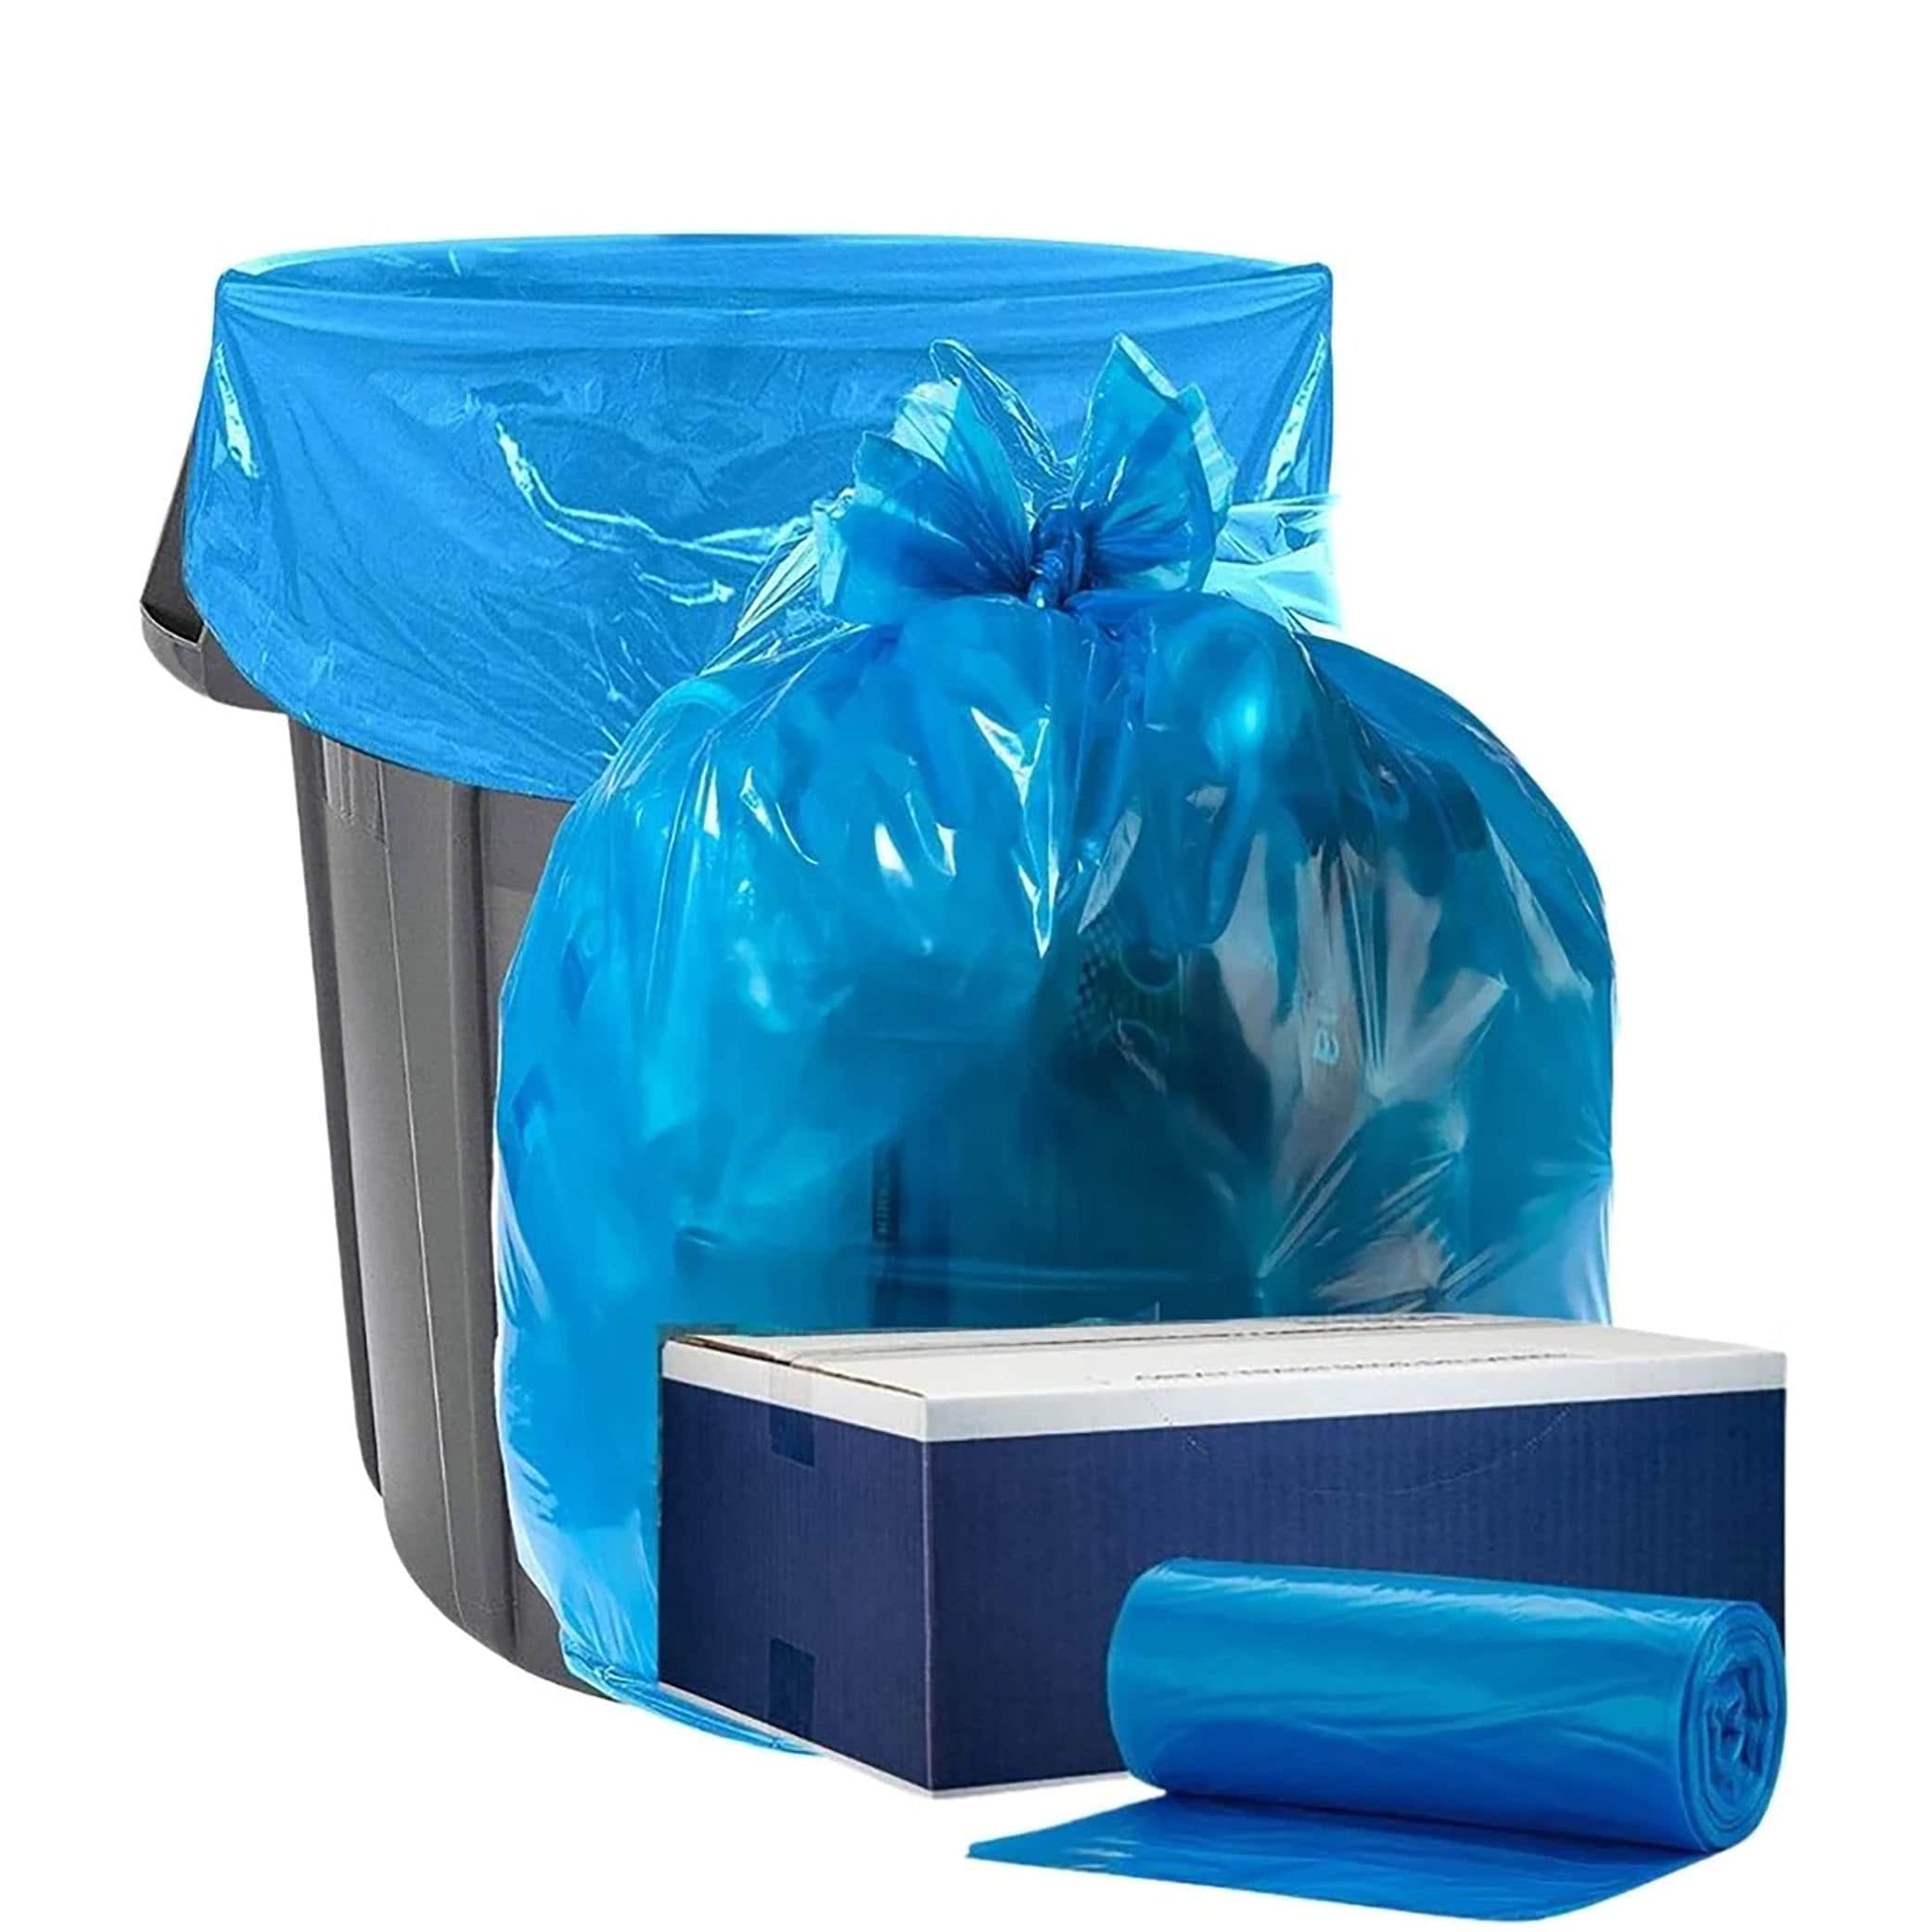 Reli. 6-10 Gallon Trash Bags, 8 Gallon Recycling Blue Garbage Bags